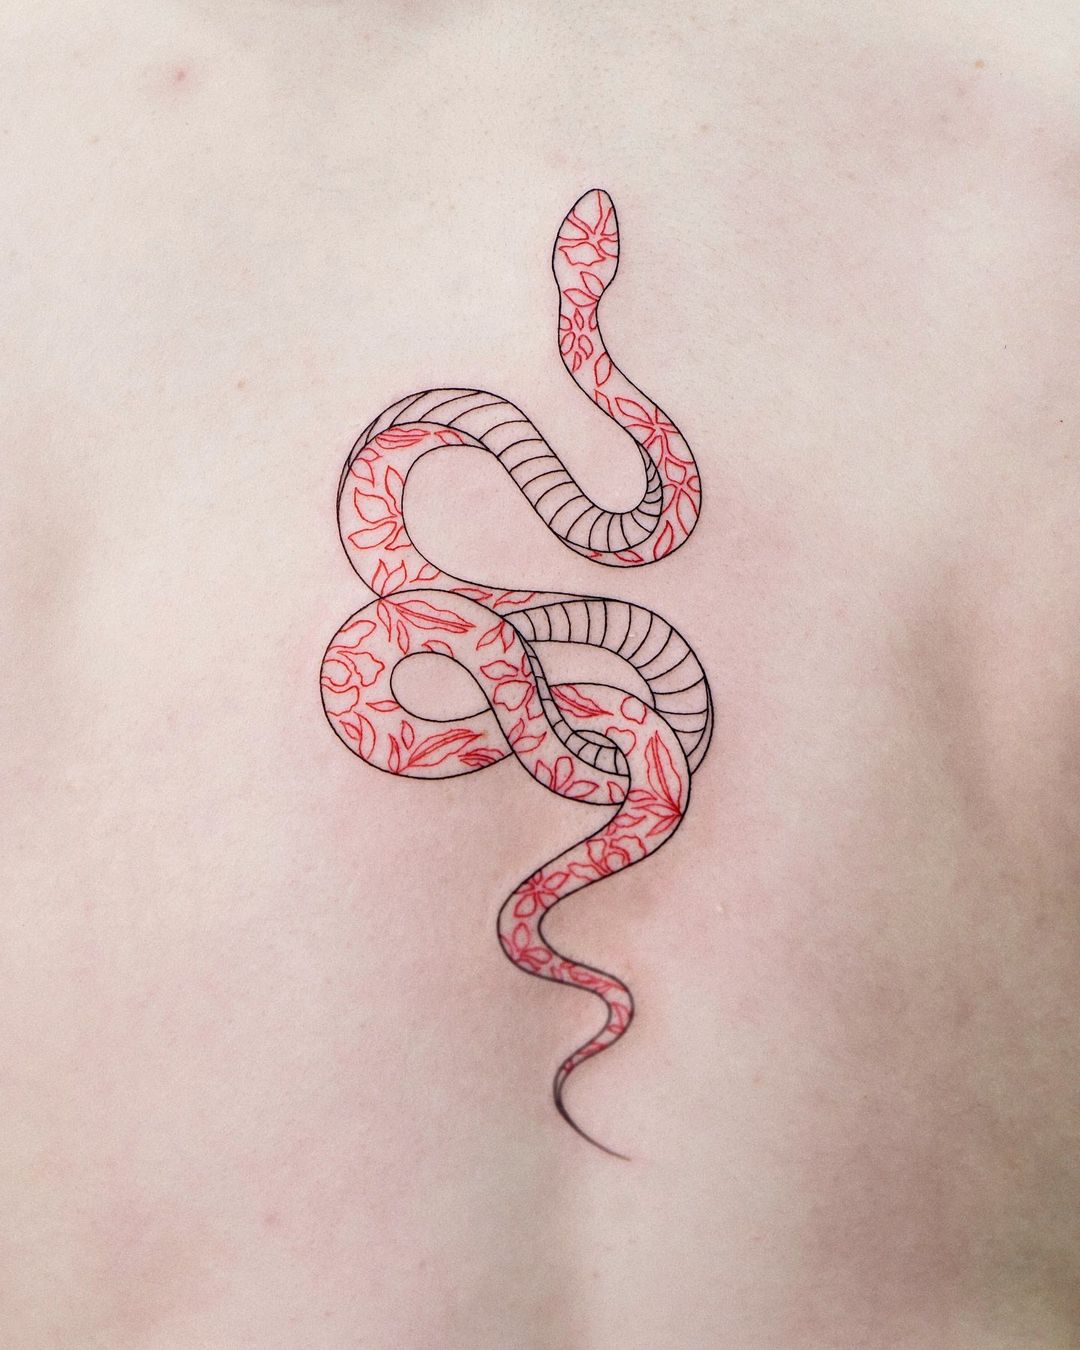 Actual Snake Tattoo Symbolism